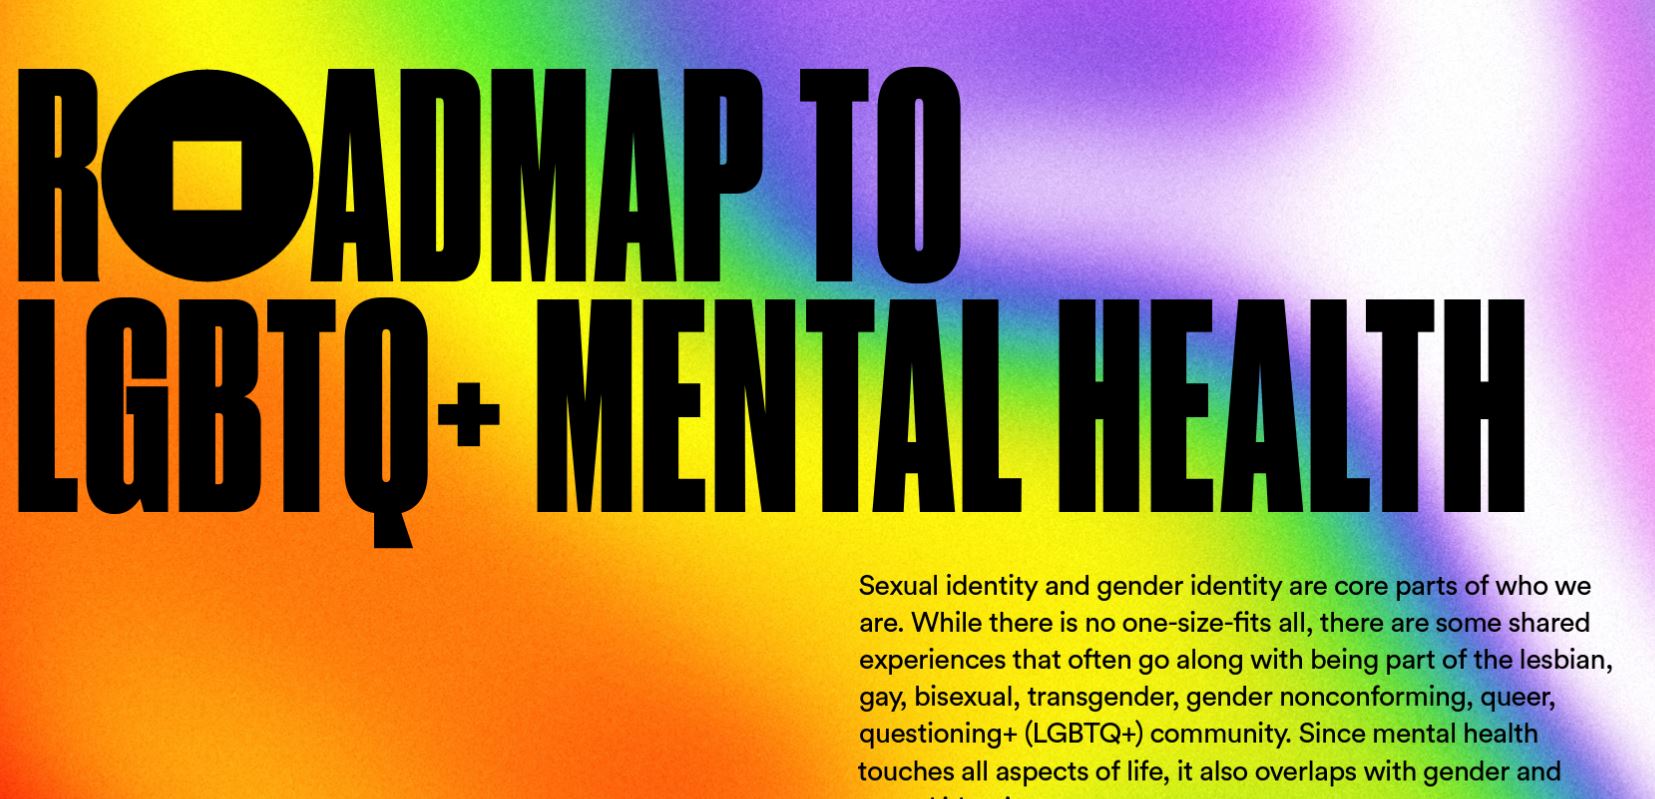 Mental Health Coalition:Roadmap to LGBTQ+ Mental Health